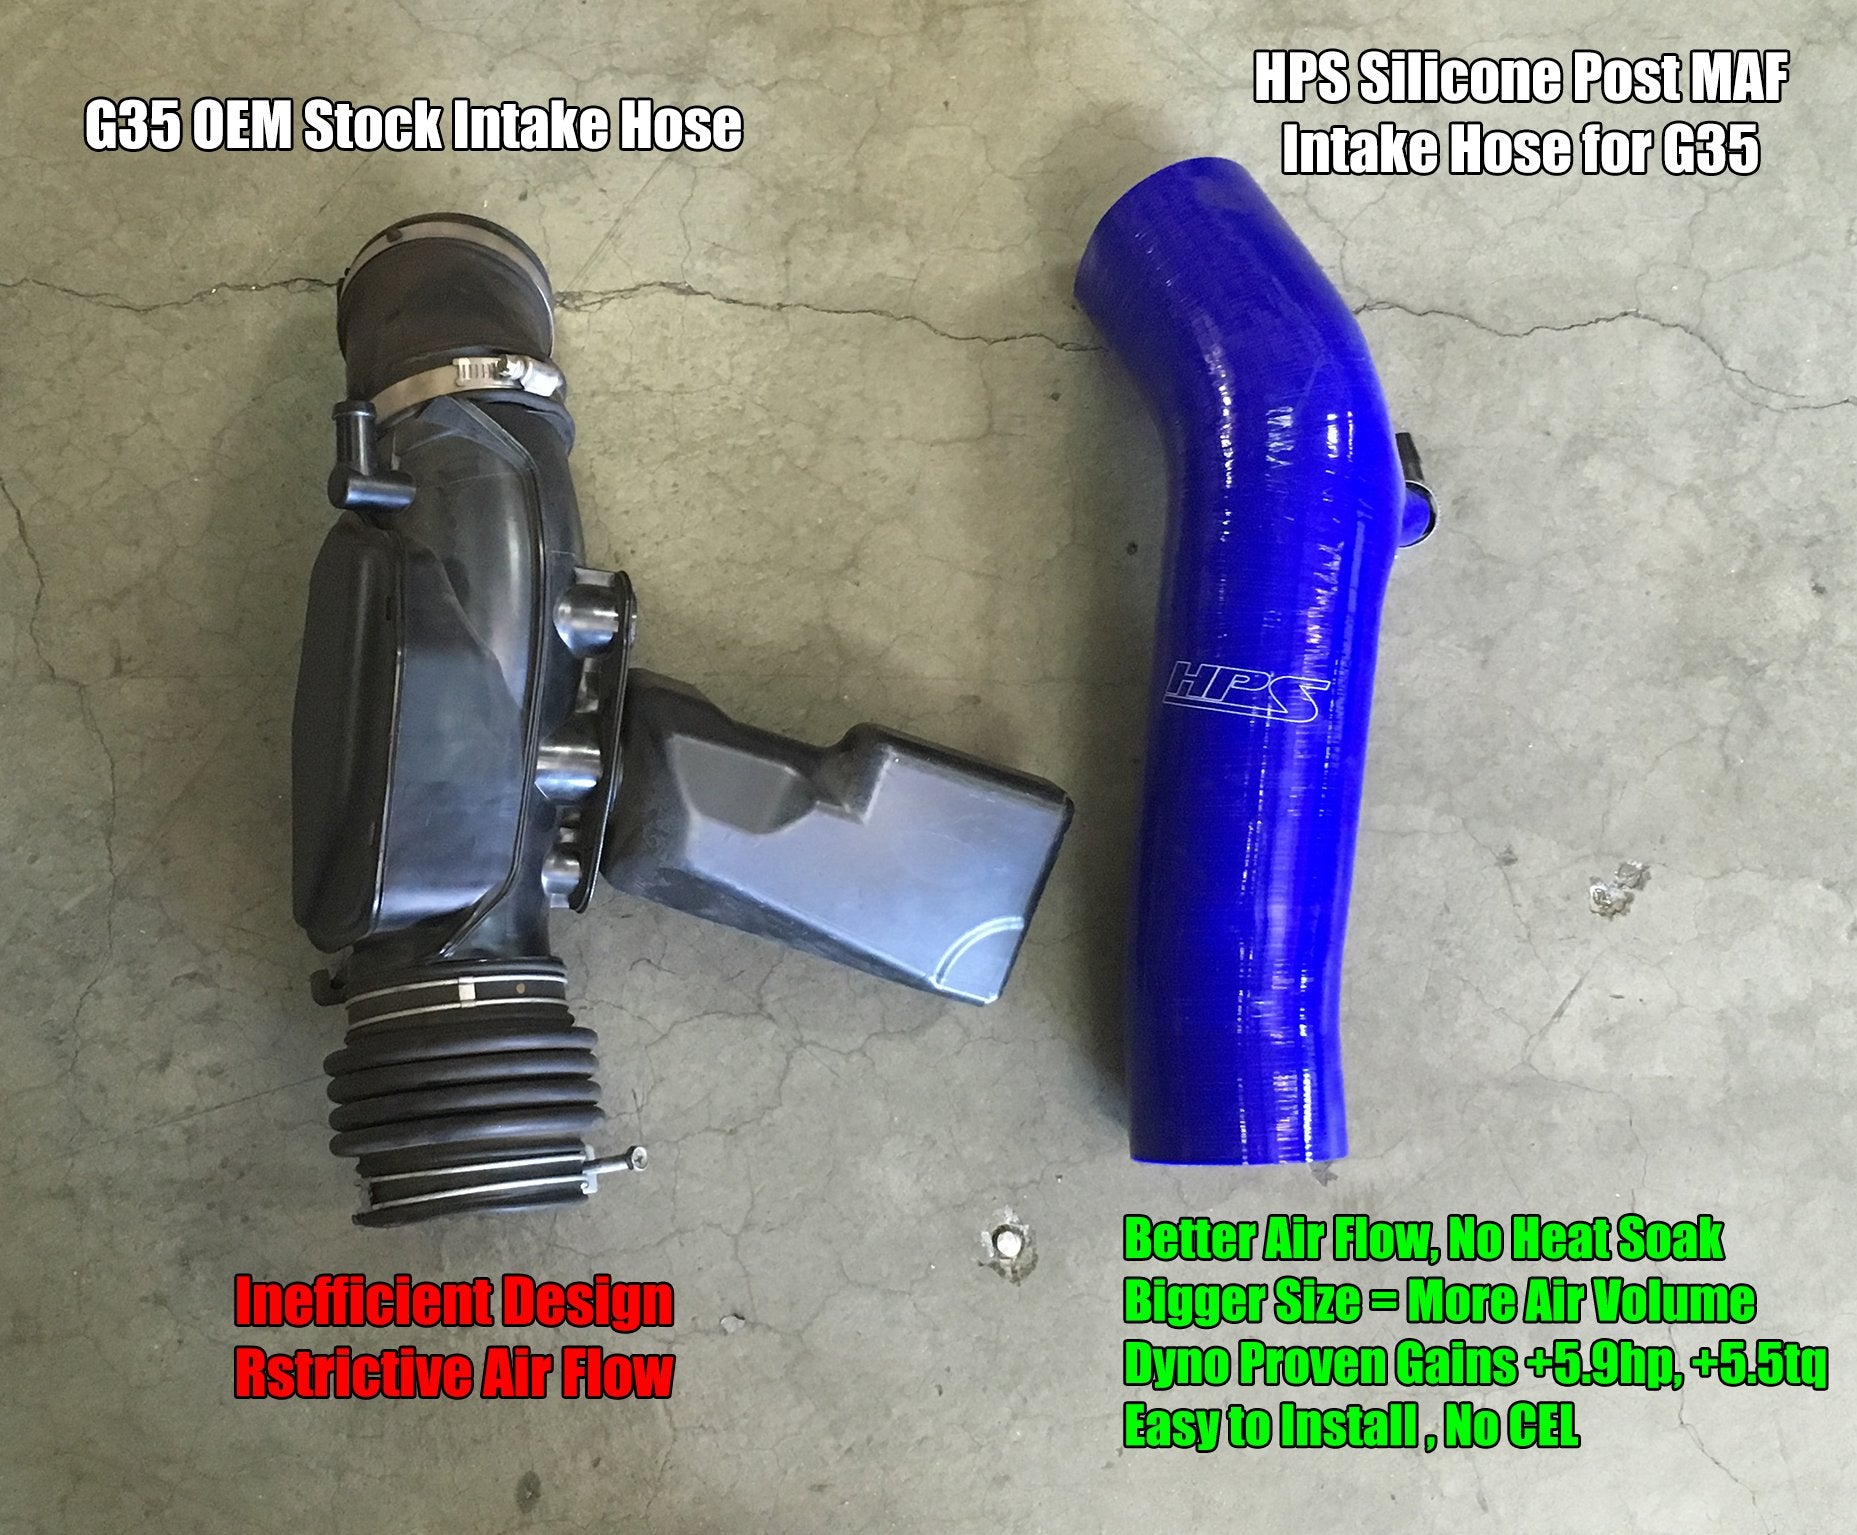 HPS Silicone Post MAF Air Intake Kit vs OEM intake Hose Infiniti 03-07 G35 Coupe 3.5L V6